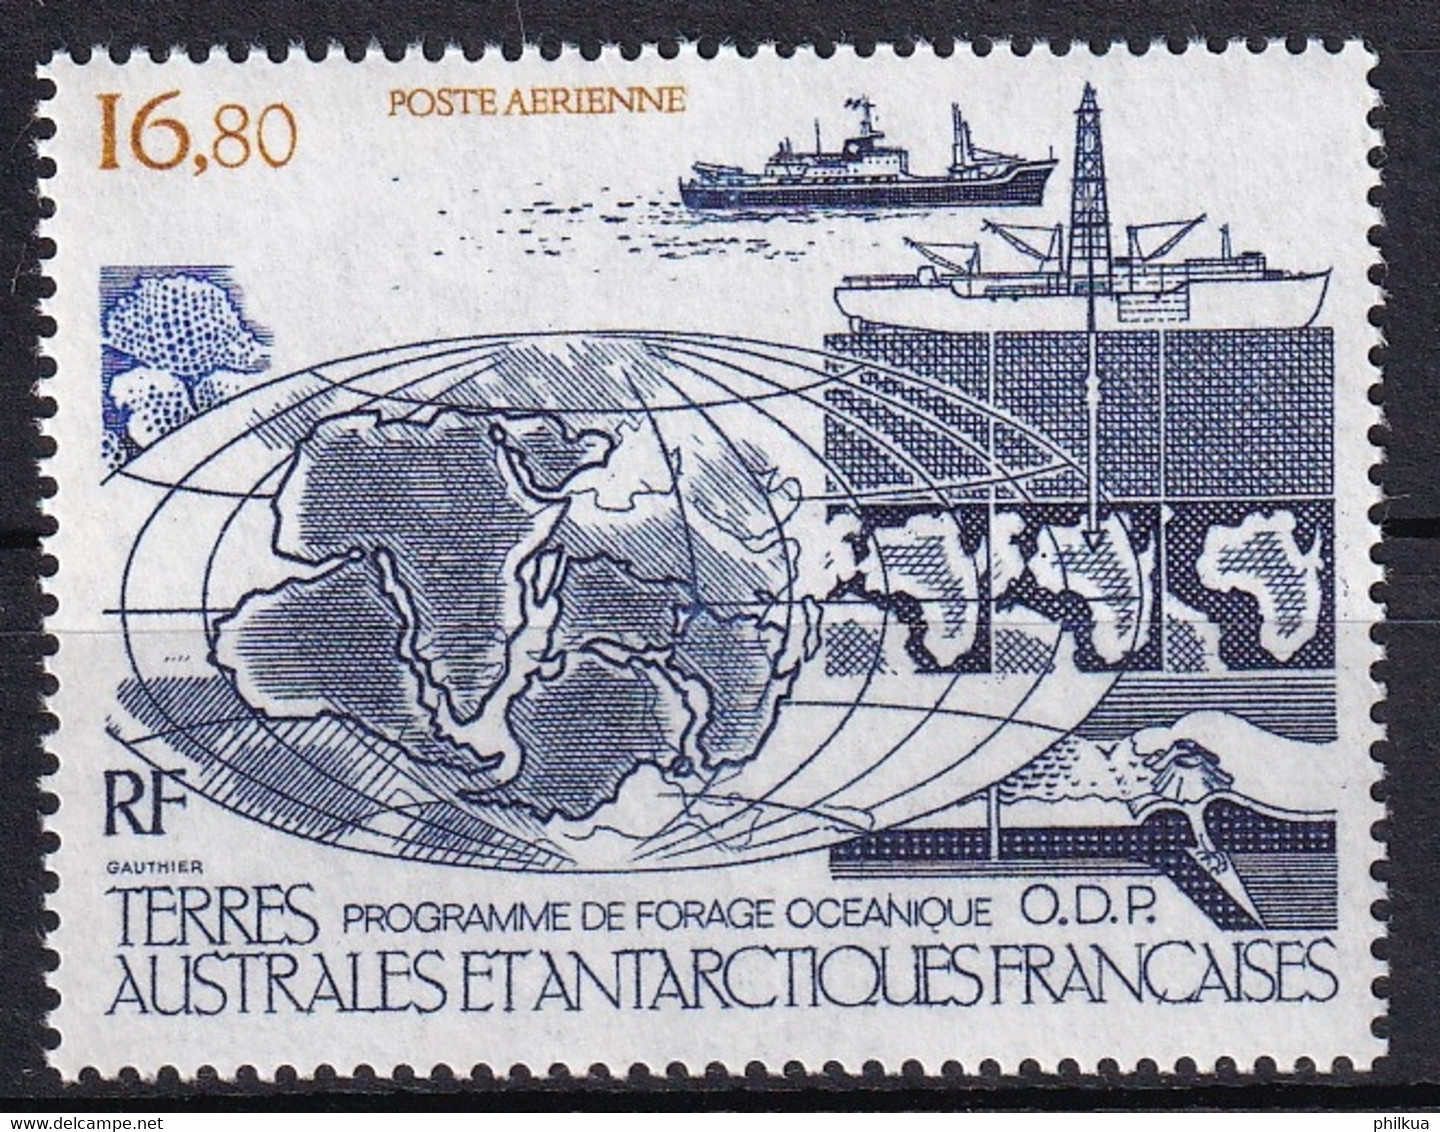 MiNr. 229 Franz. Geb. I. D. Antarktis1987, 1. Jan. Ozeanisches Erdöl-Bohrprogramm (ODP) - Postfrisch/**/MNH - Schiffahrt